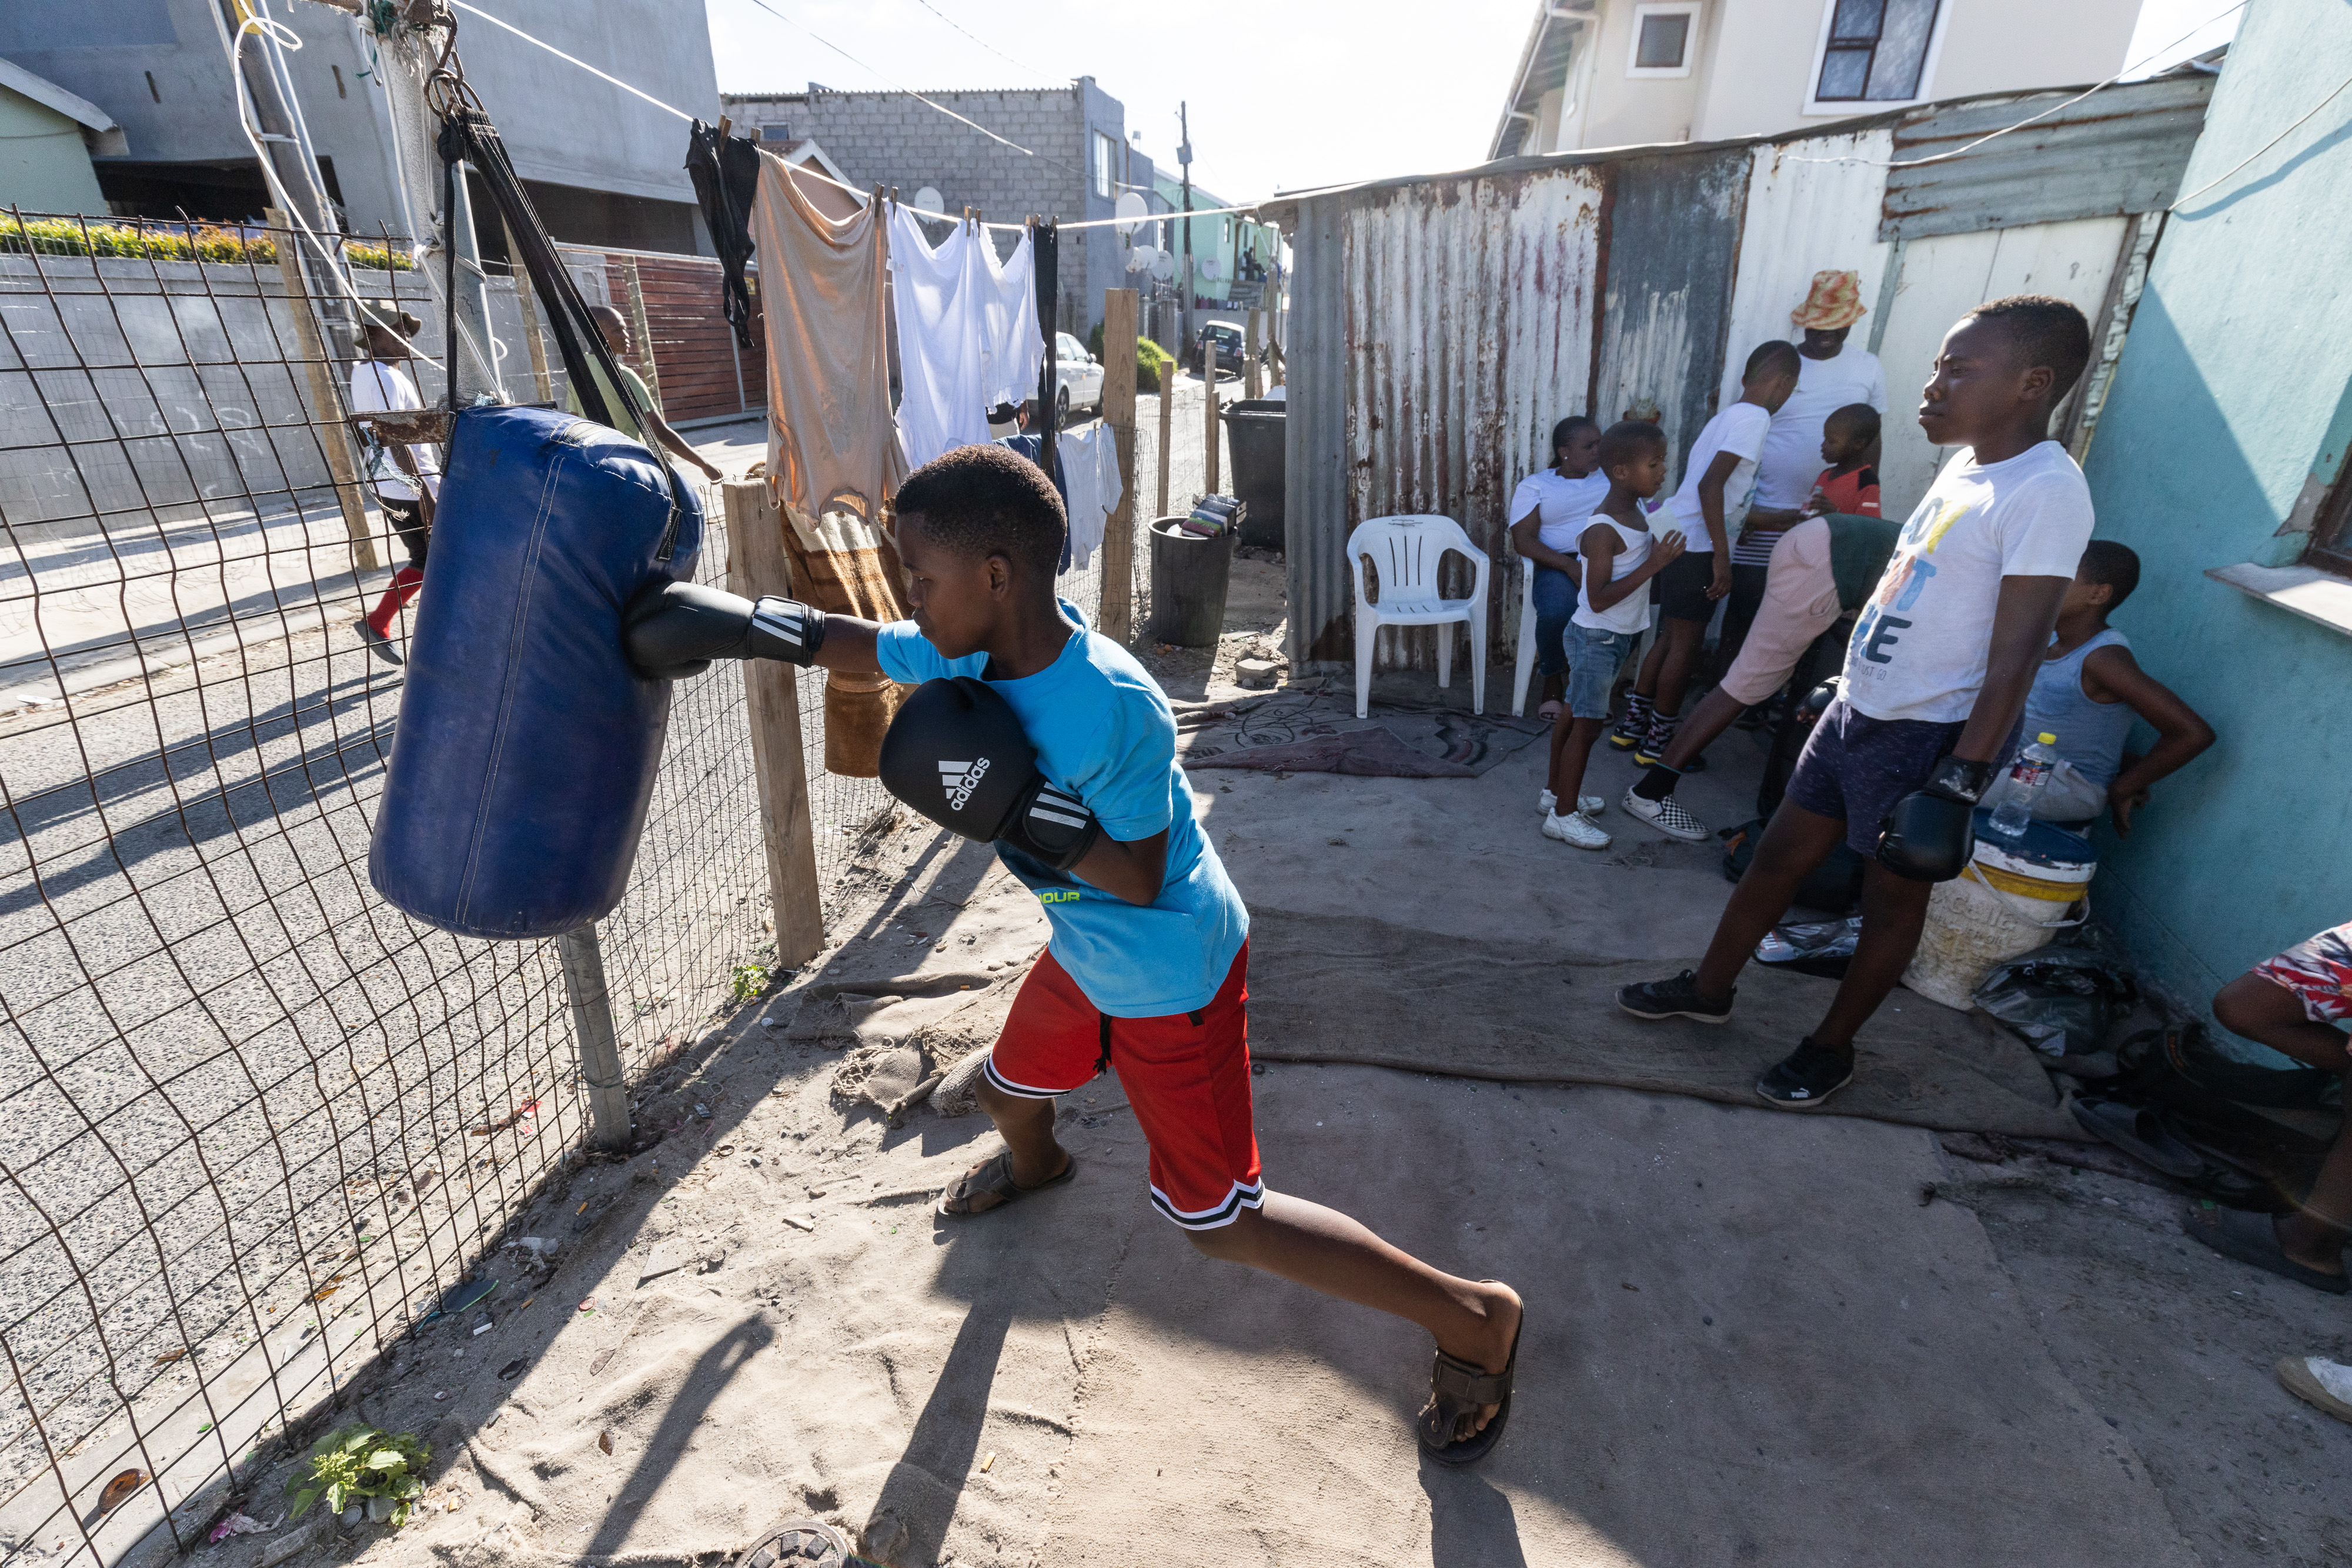 Aklhonya Mehlo, township boxing